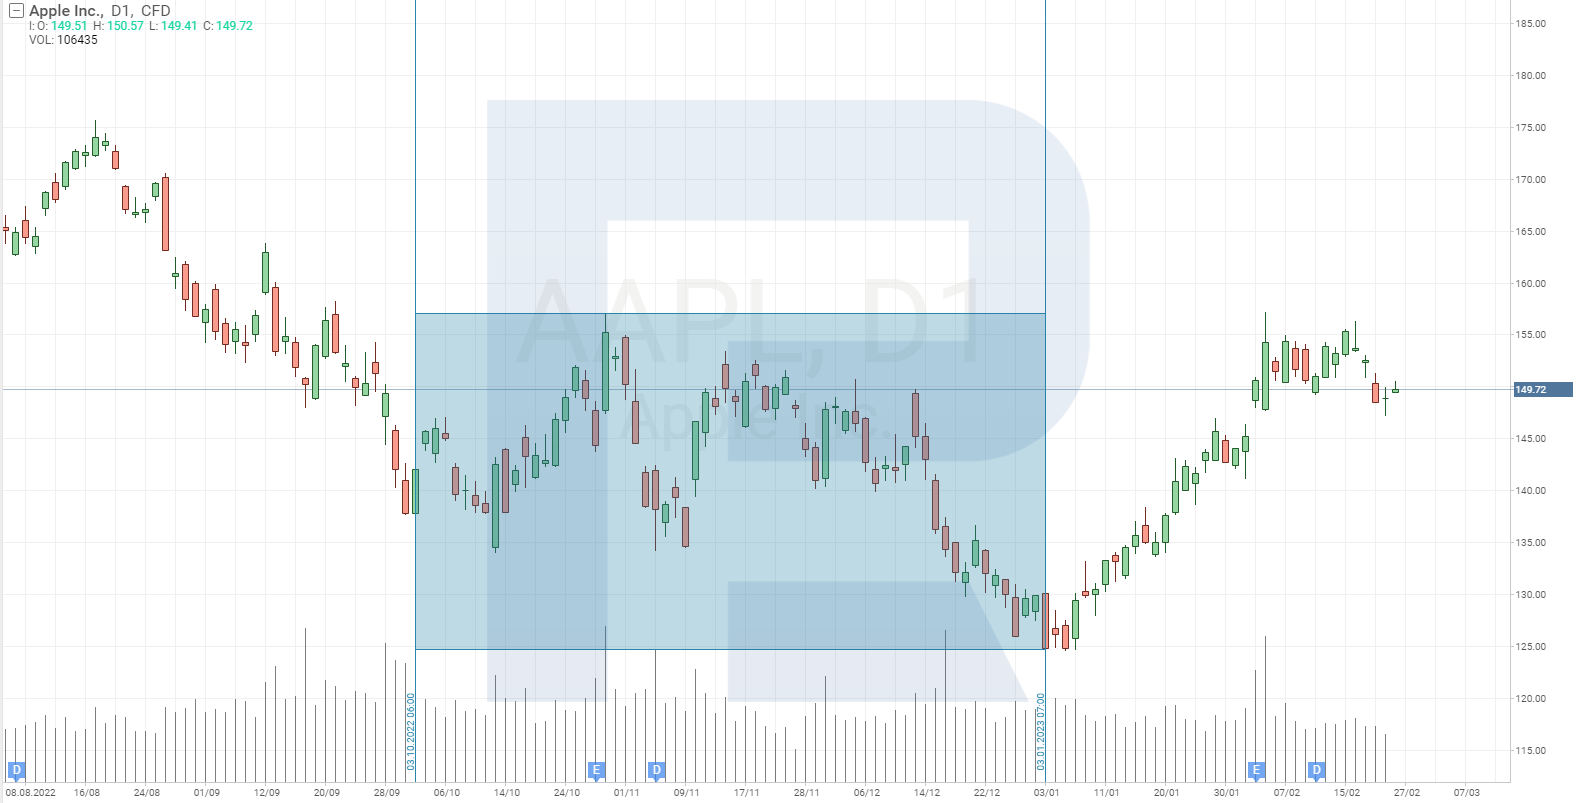 Apple Inc. share price chart*